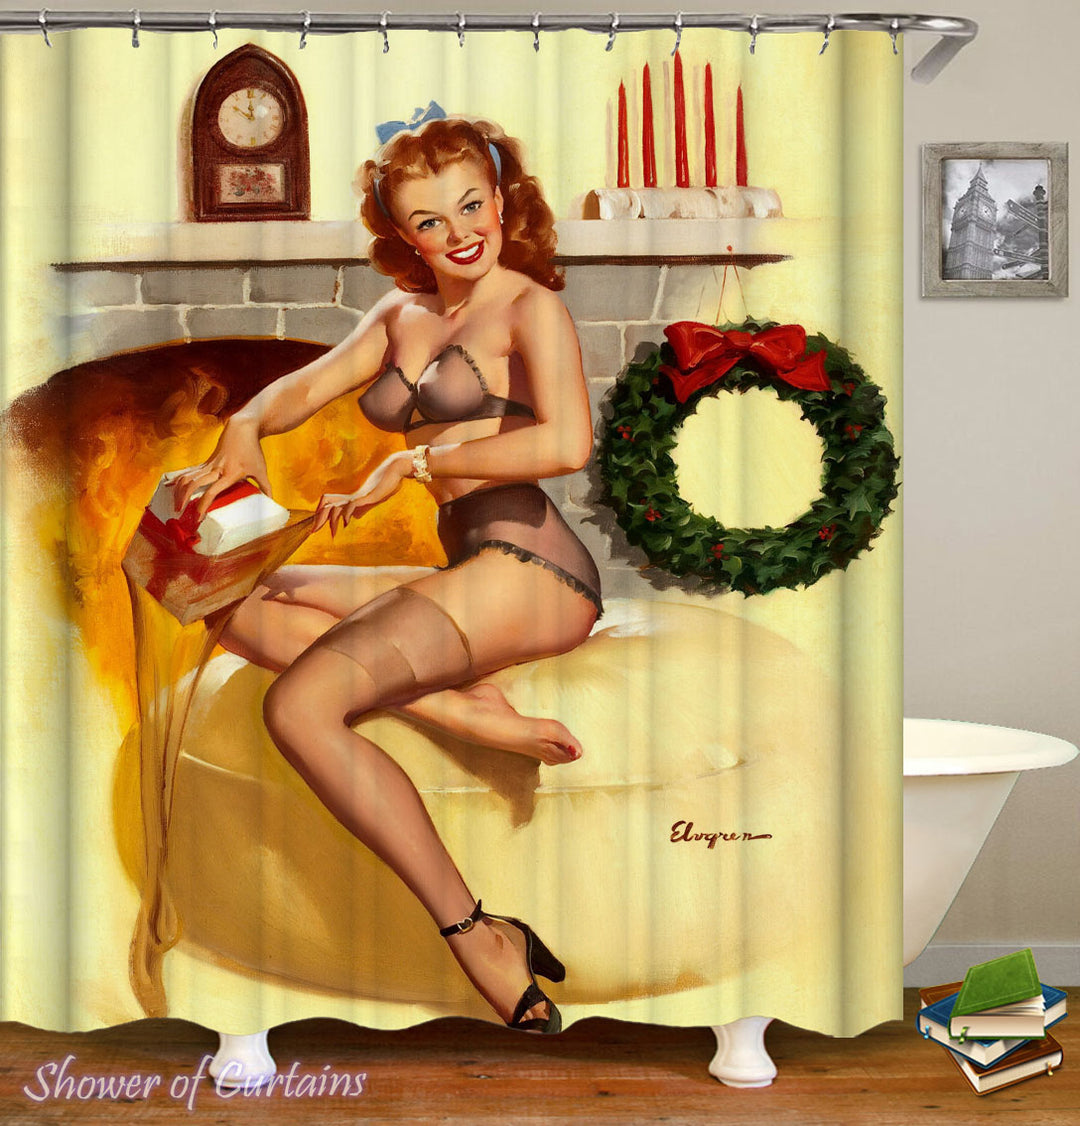 Christmas Pin Up Girl Shower Curtain - Men's Bathroom Decor